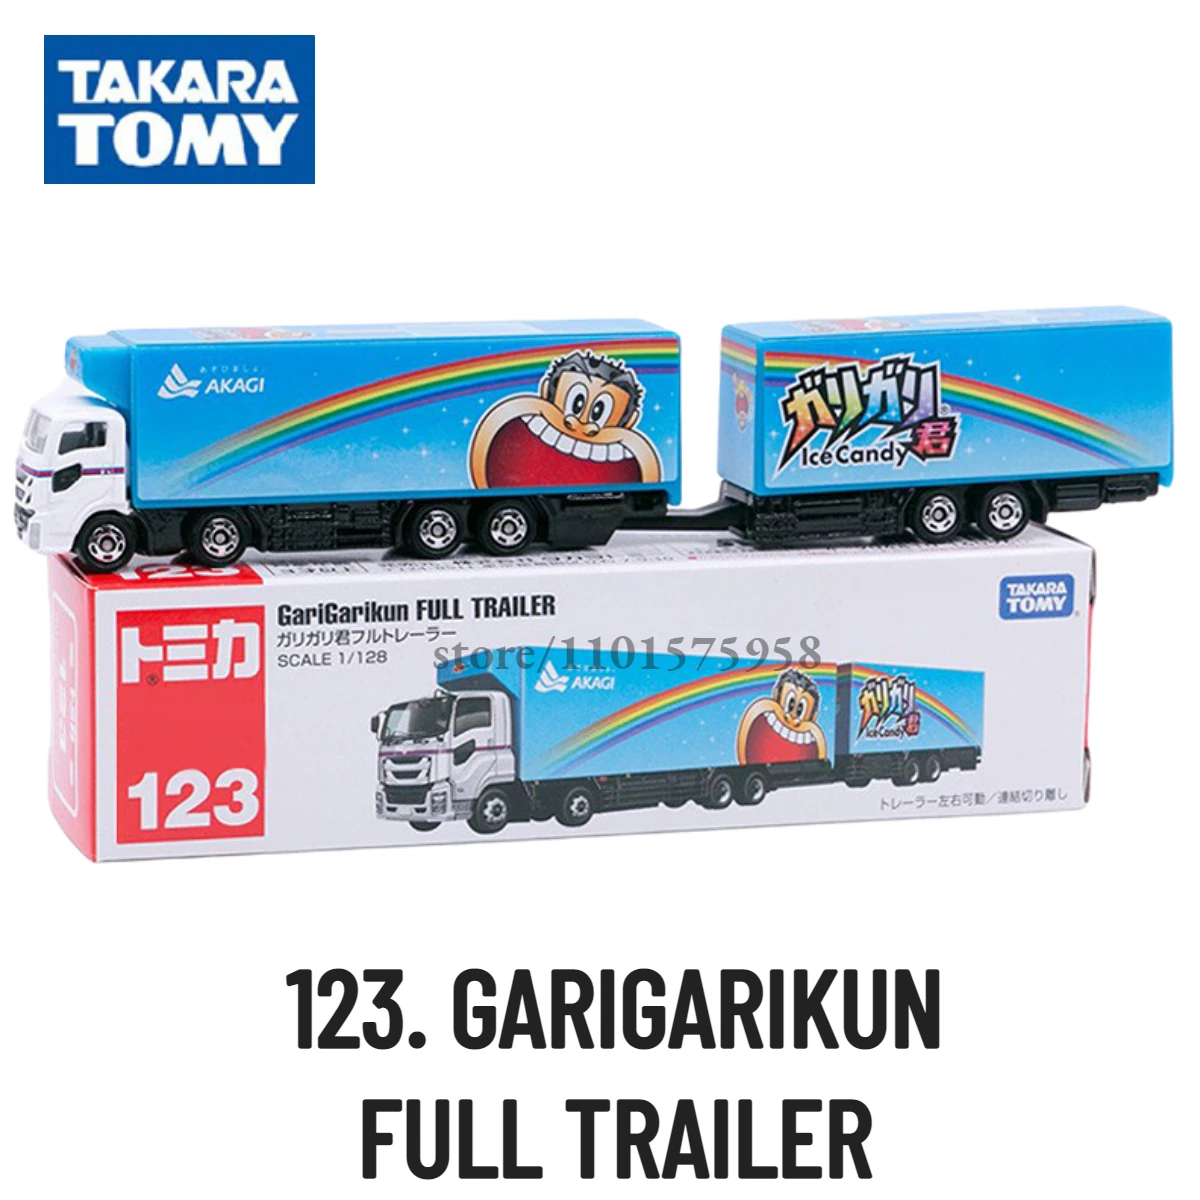 Takara Tomy Tomica Special Vehicle, 123. GARIGARIKUN FULL TRAILER Car Model Truck Miniature Toy for Boy